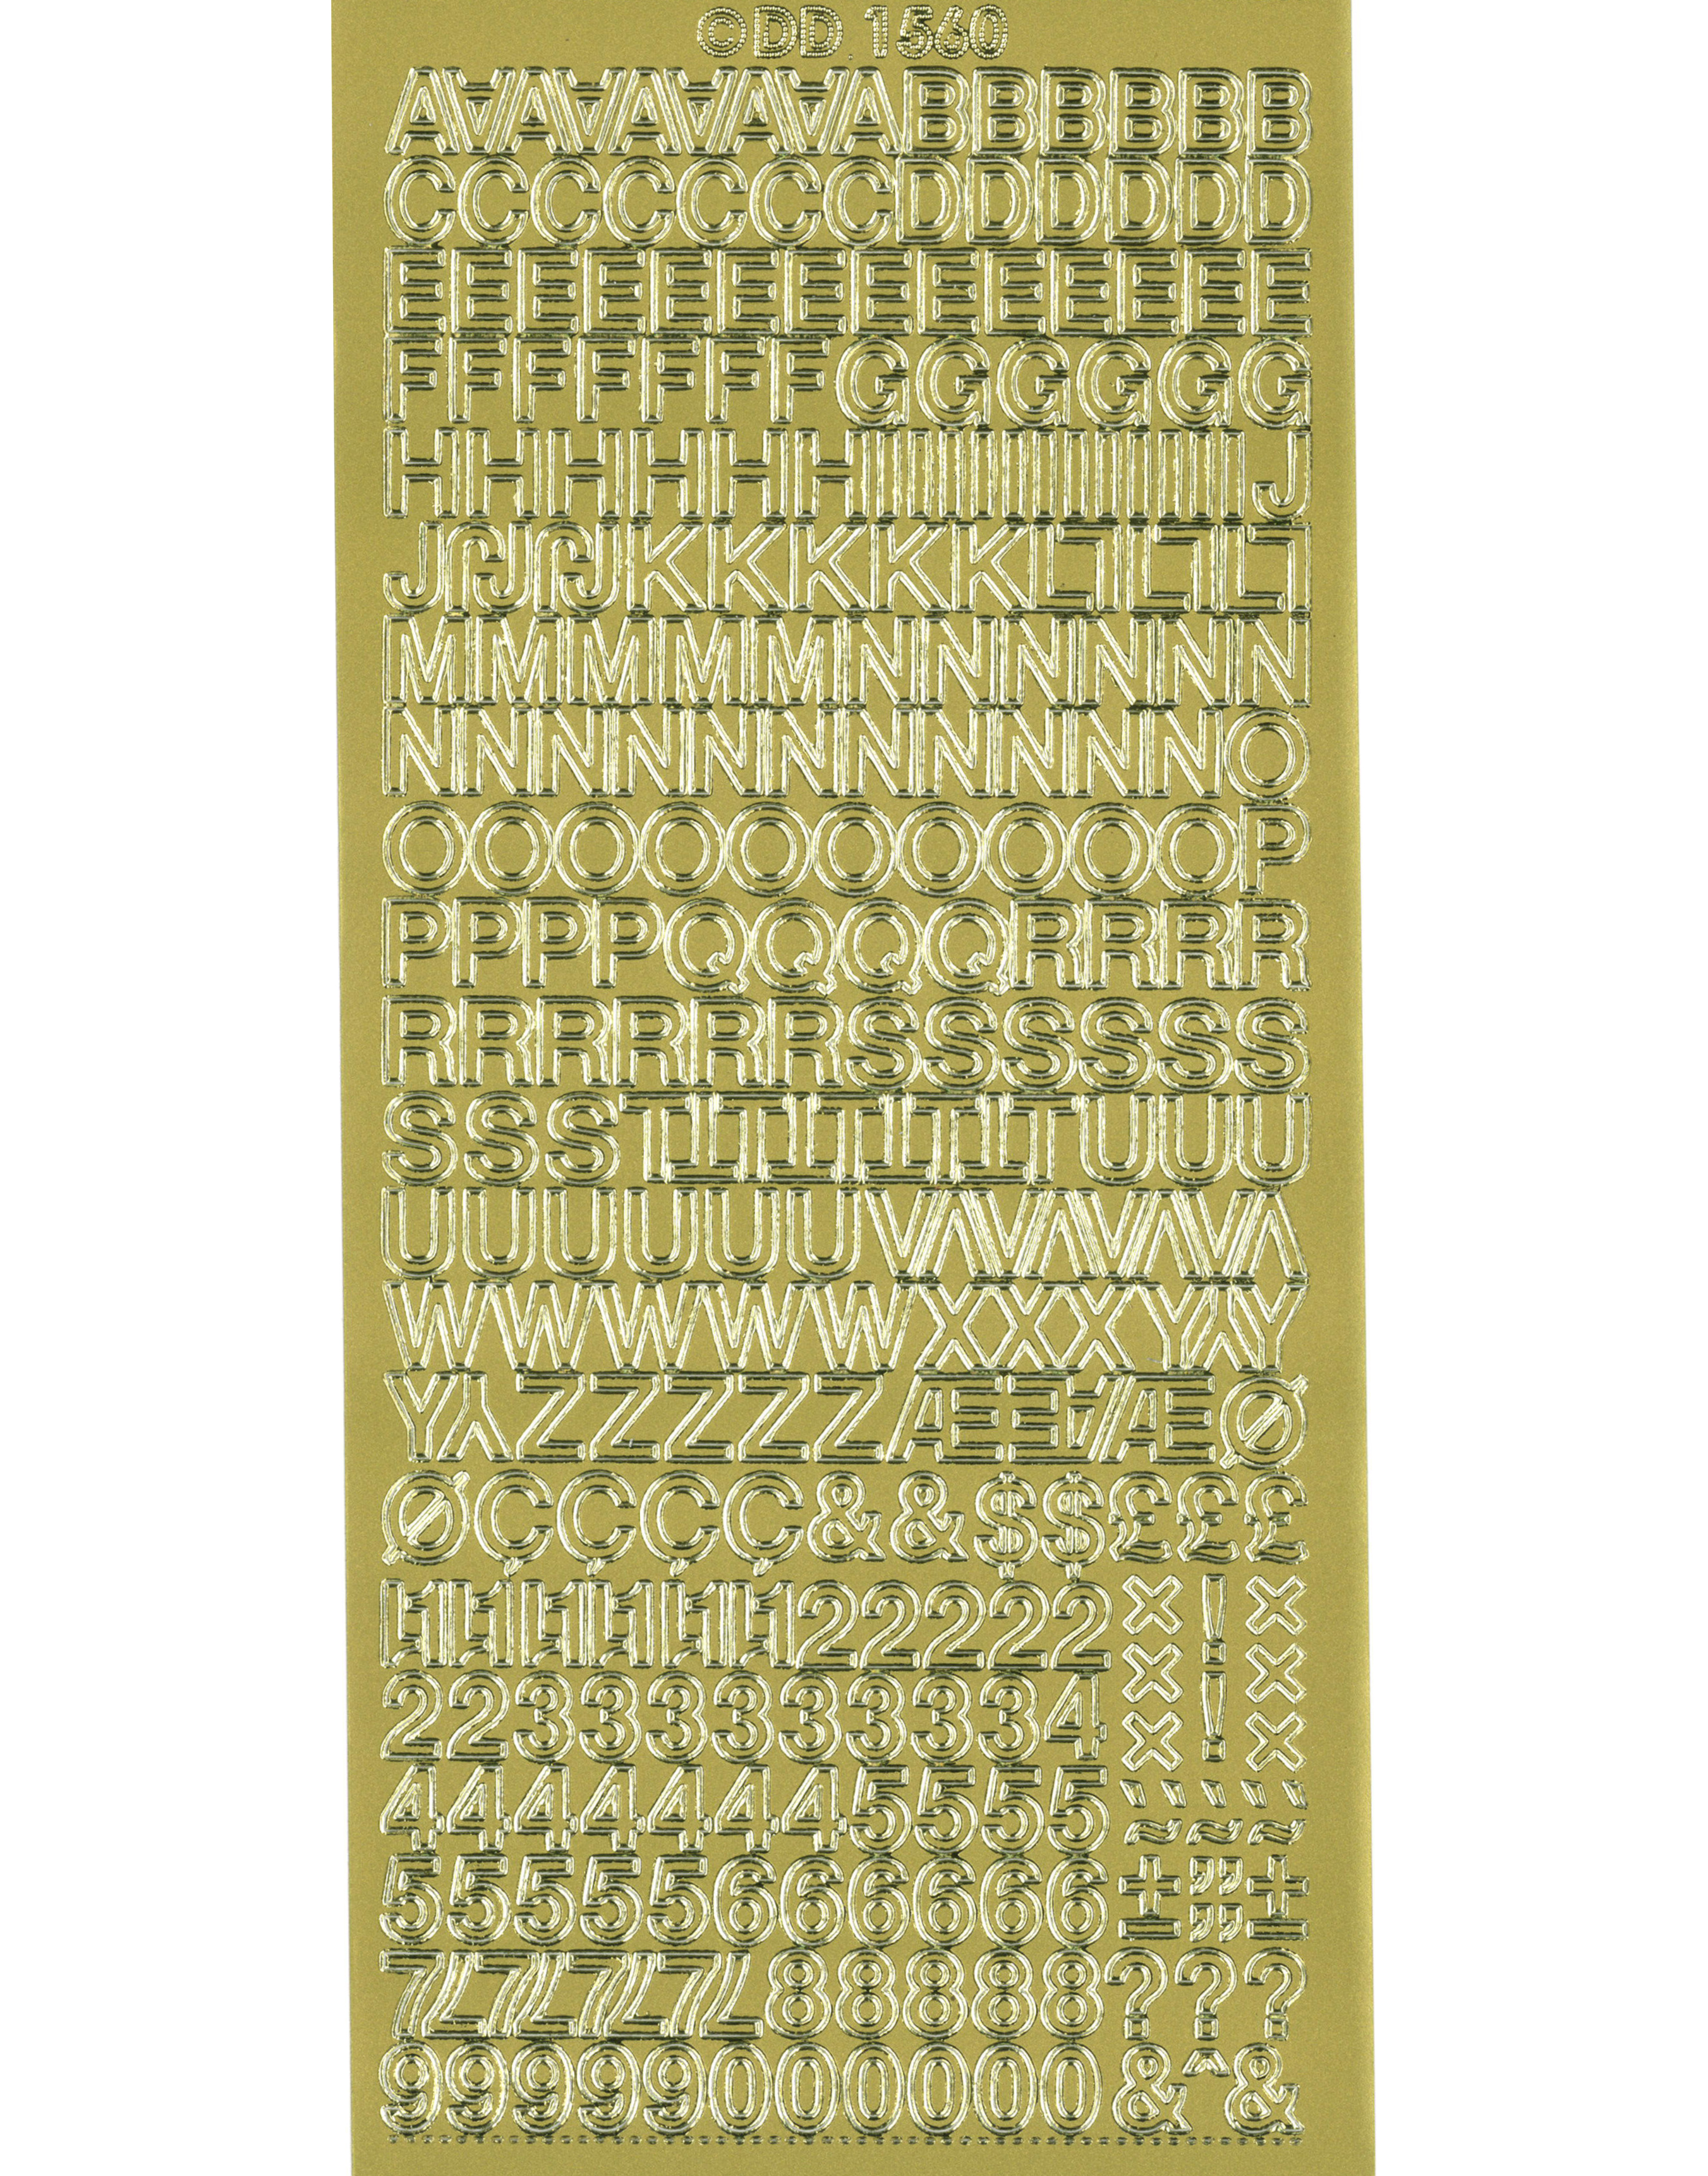 Shiny Outline Stickers Buchstaben Helvetica 7.5 gold Konturensticker 10x23cm Bogen